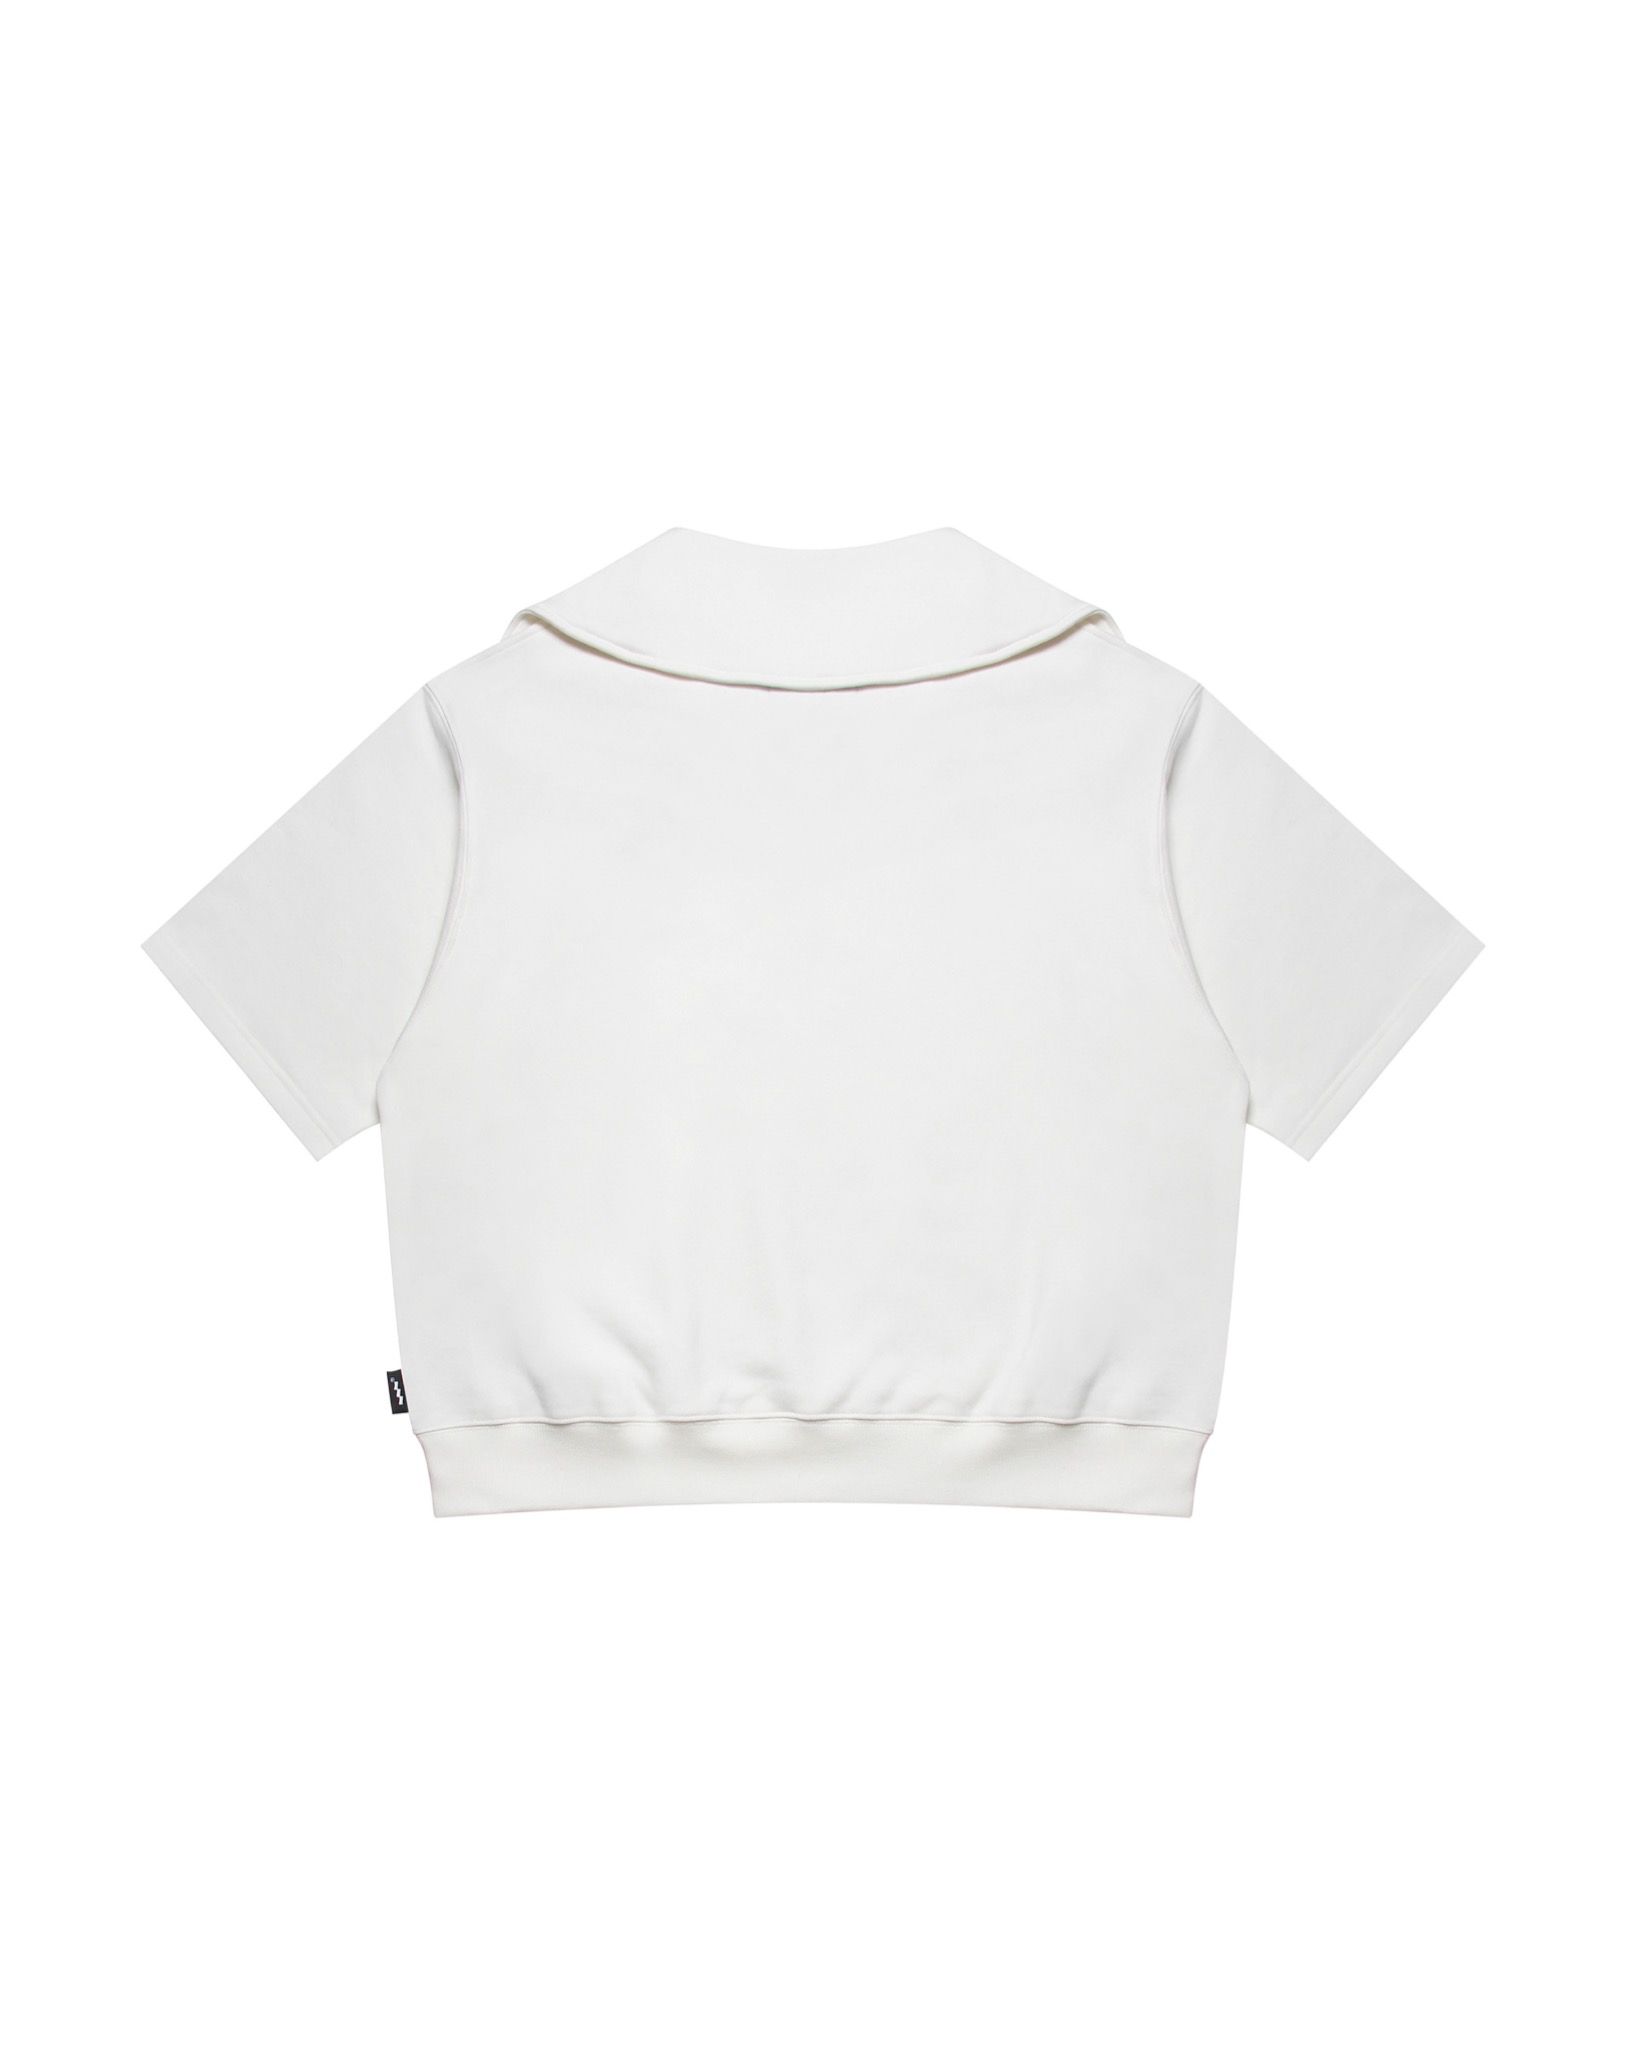 neckline-zipped-cropped-shirt-white-LIDER